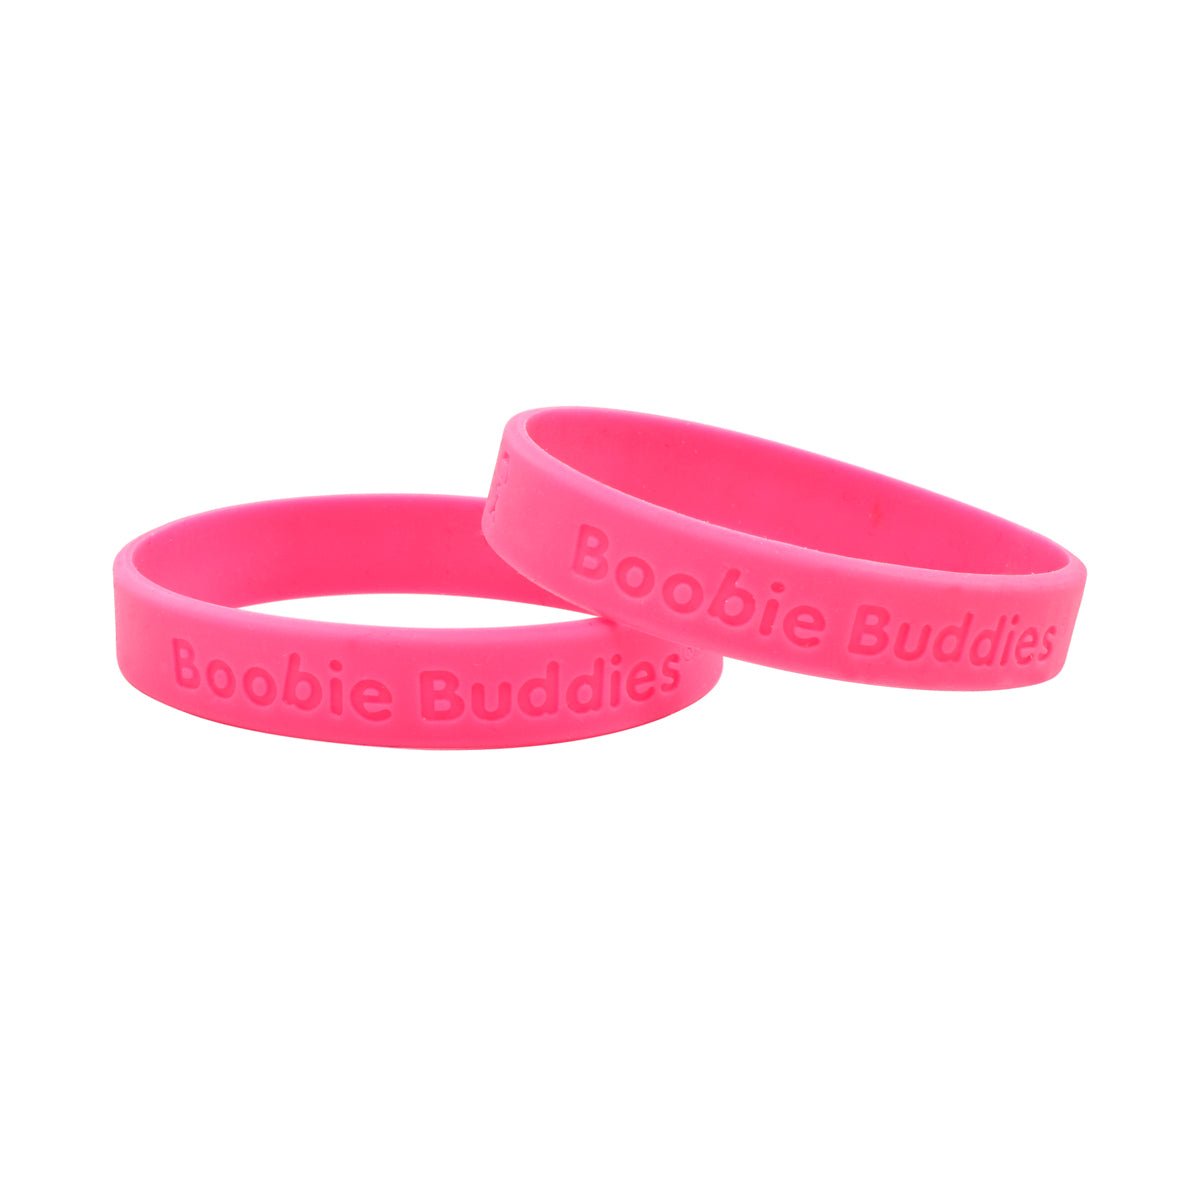 I ♥ boobies' bracelets: Charity by subterfuge?